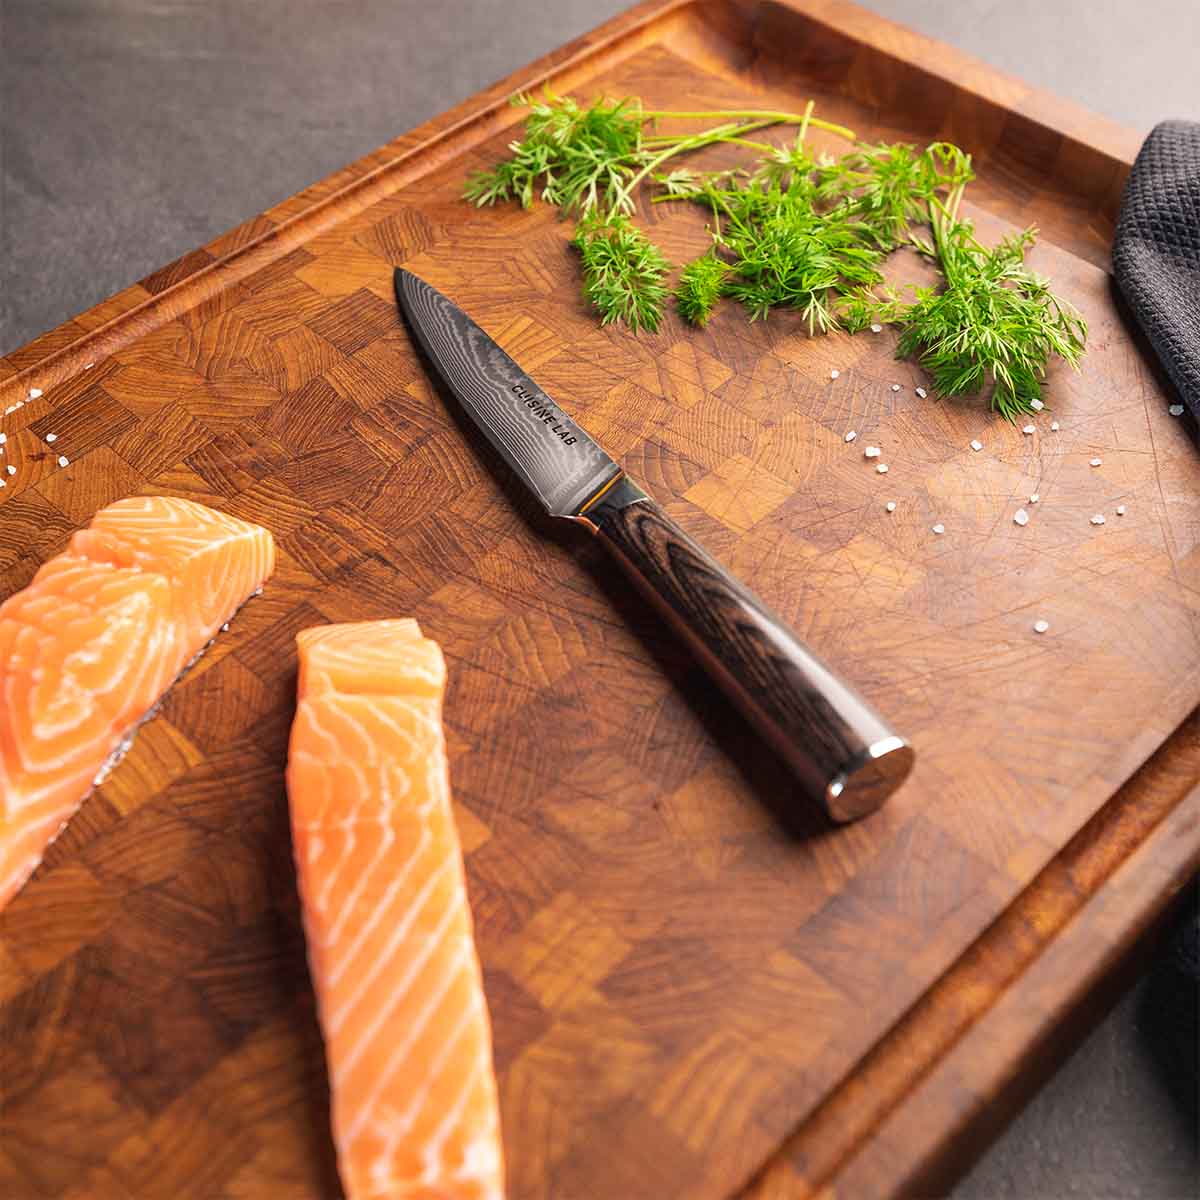 Classic UtilityKniv - 145 mm. - Kitchen Knives - cuisinelab